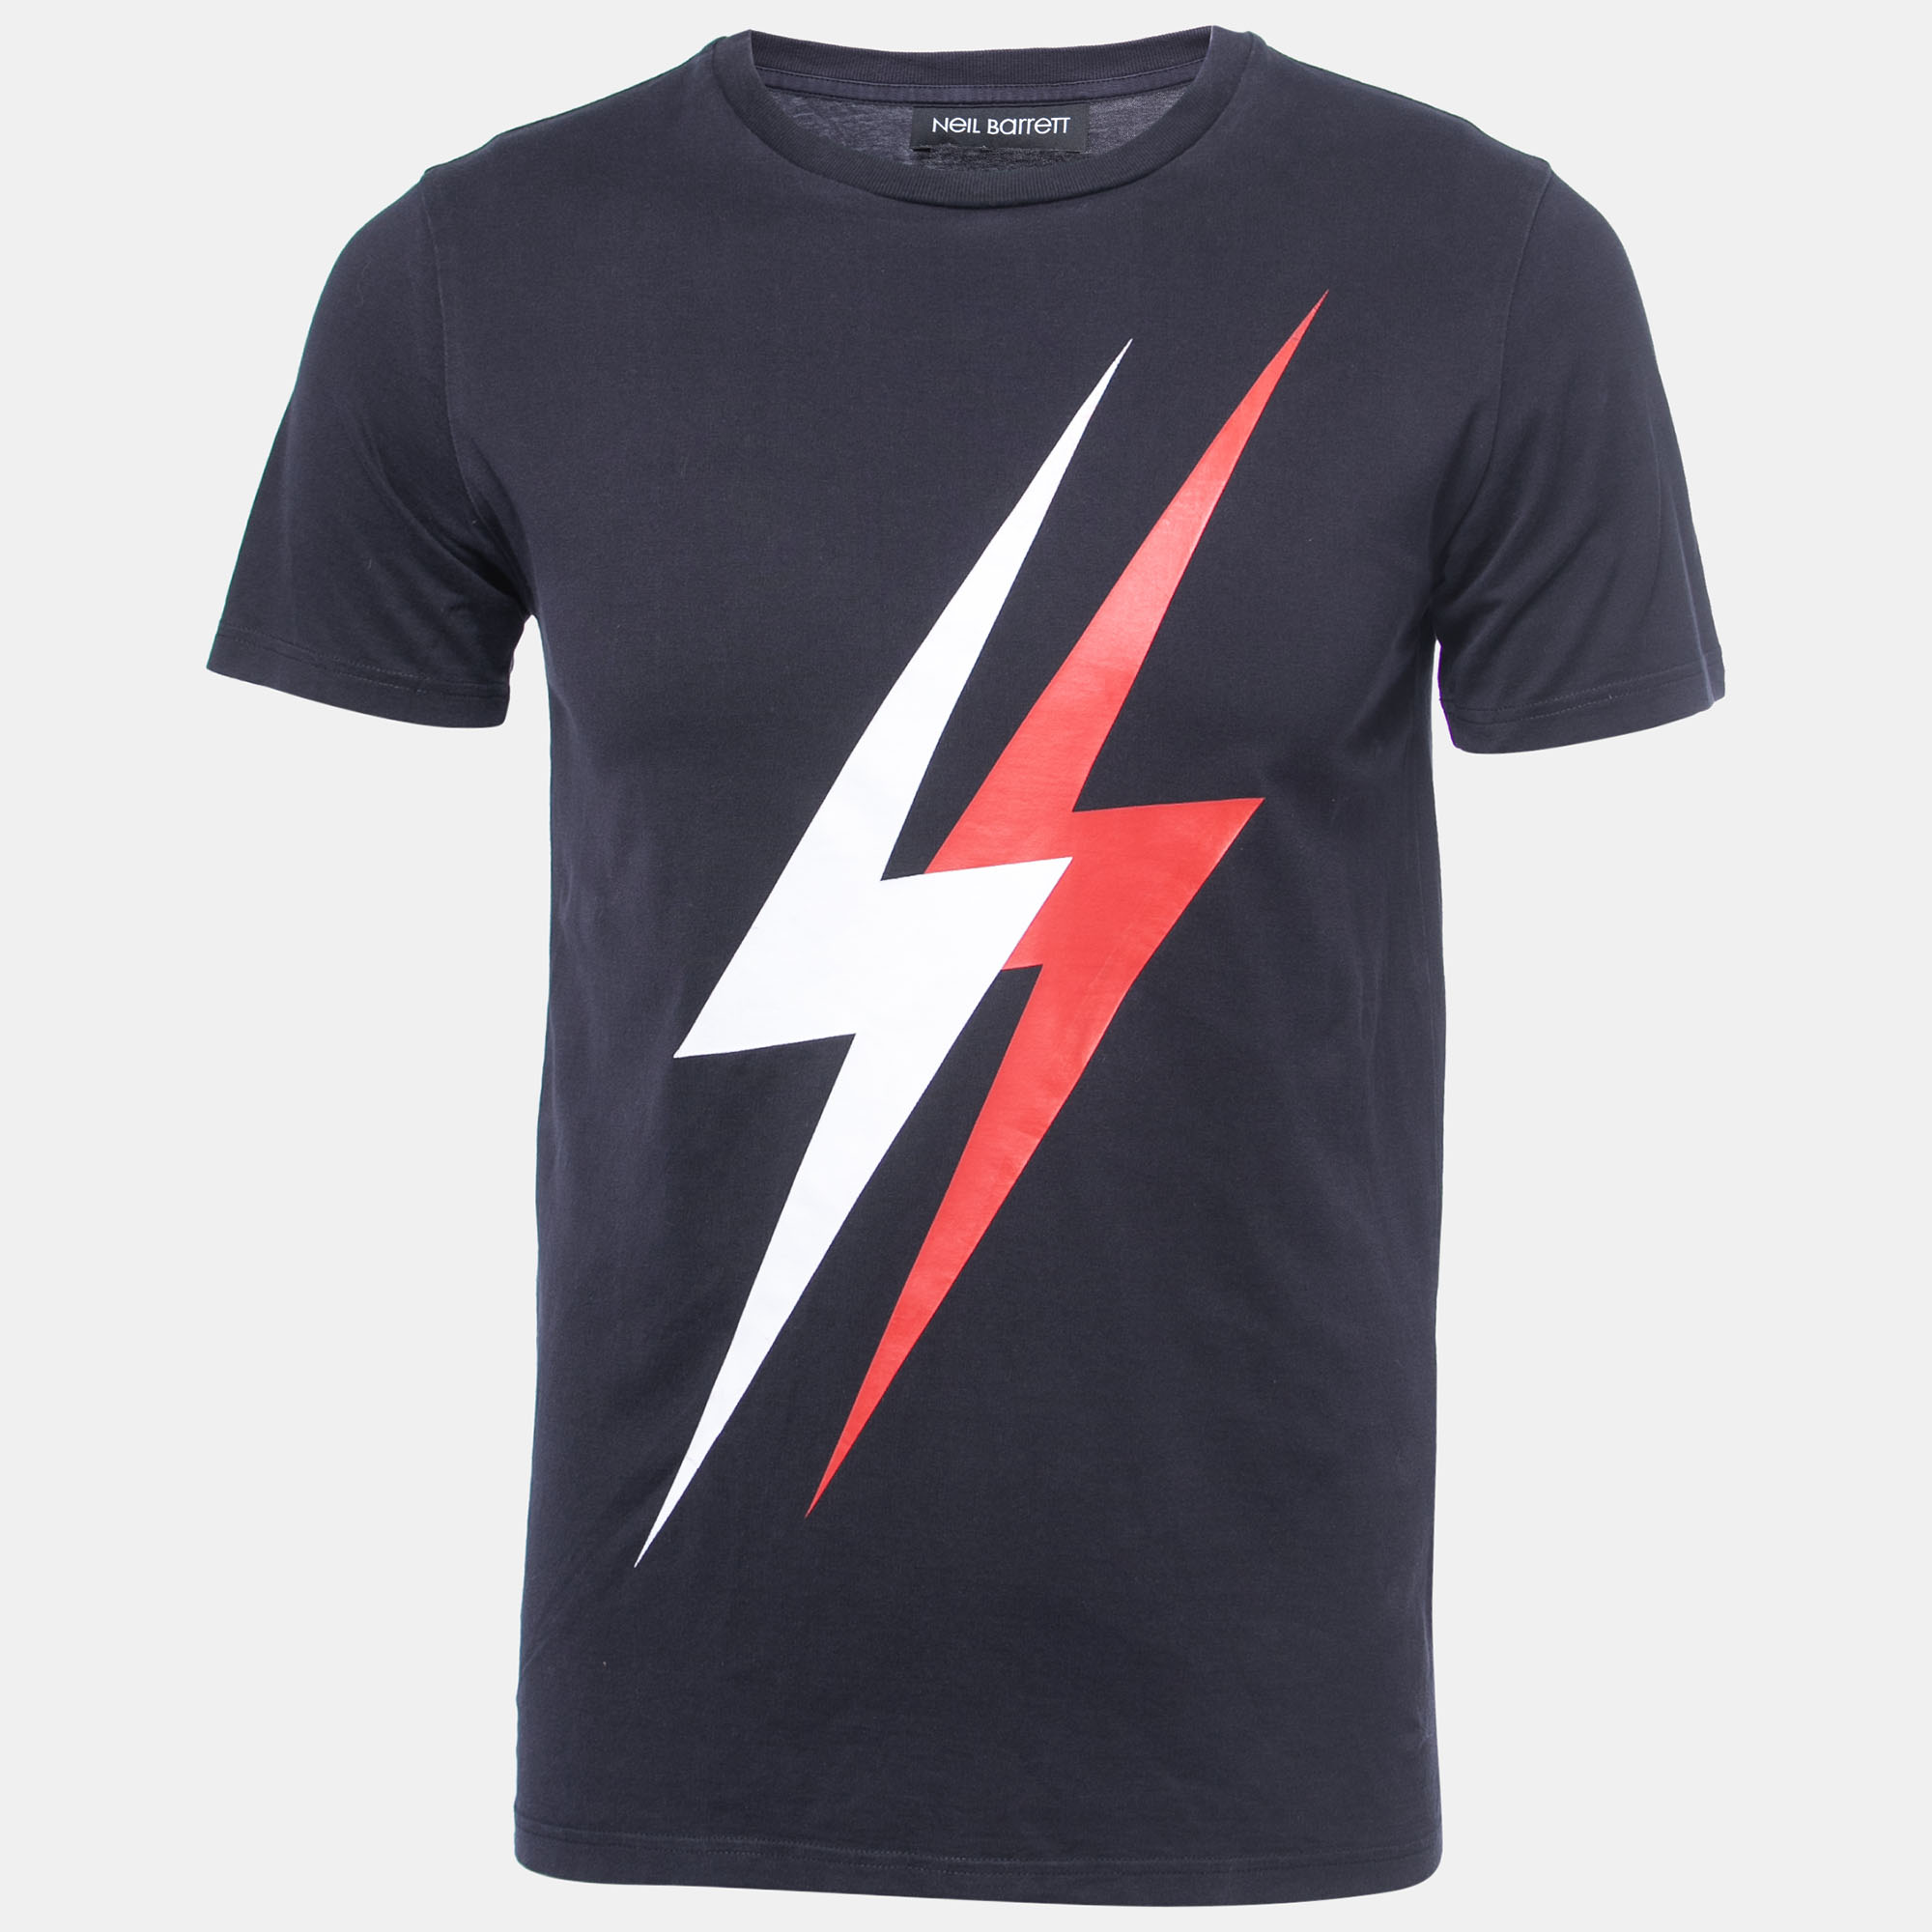 

Neil Barrett Navy Blue Lightning Bolt Print Cotton Slim Fit T-Shirt